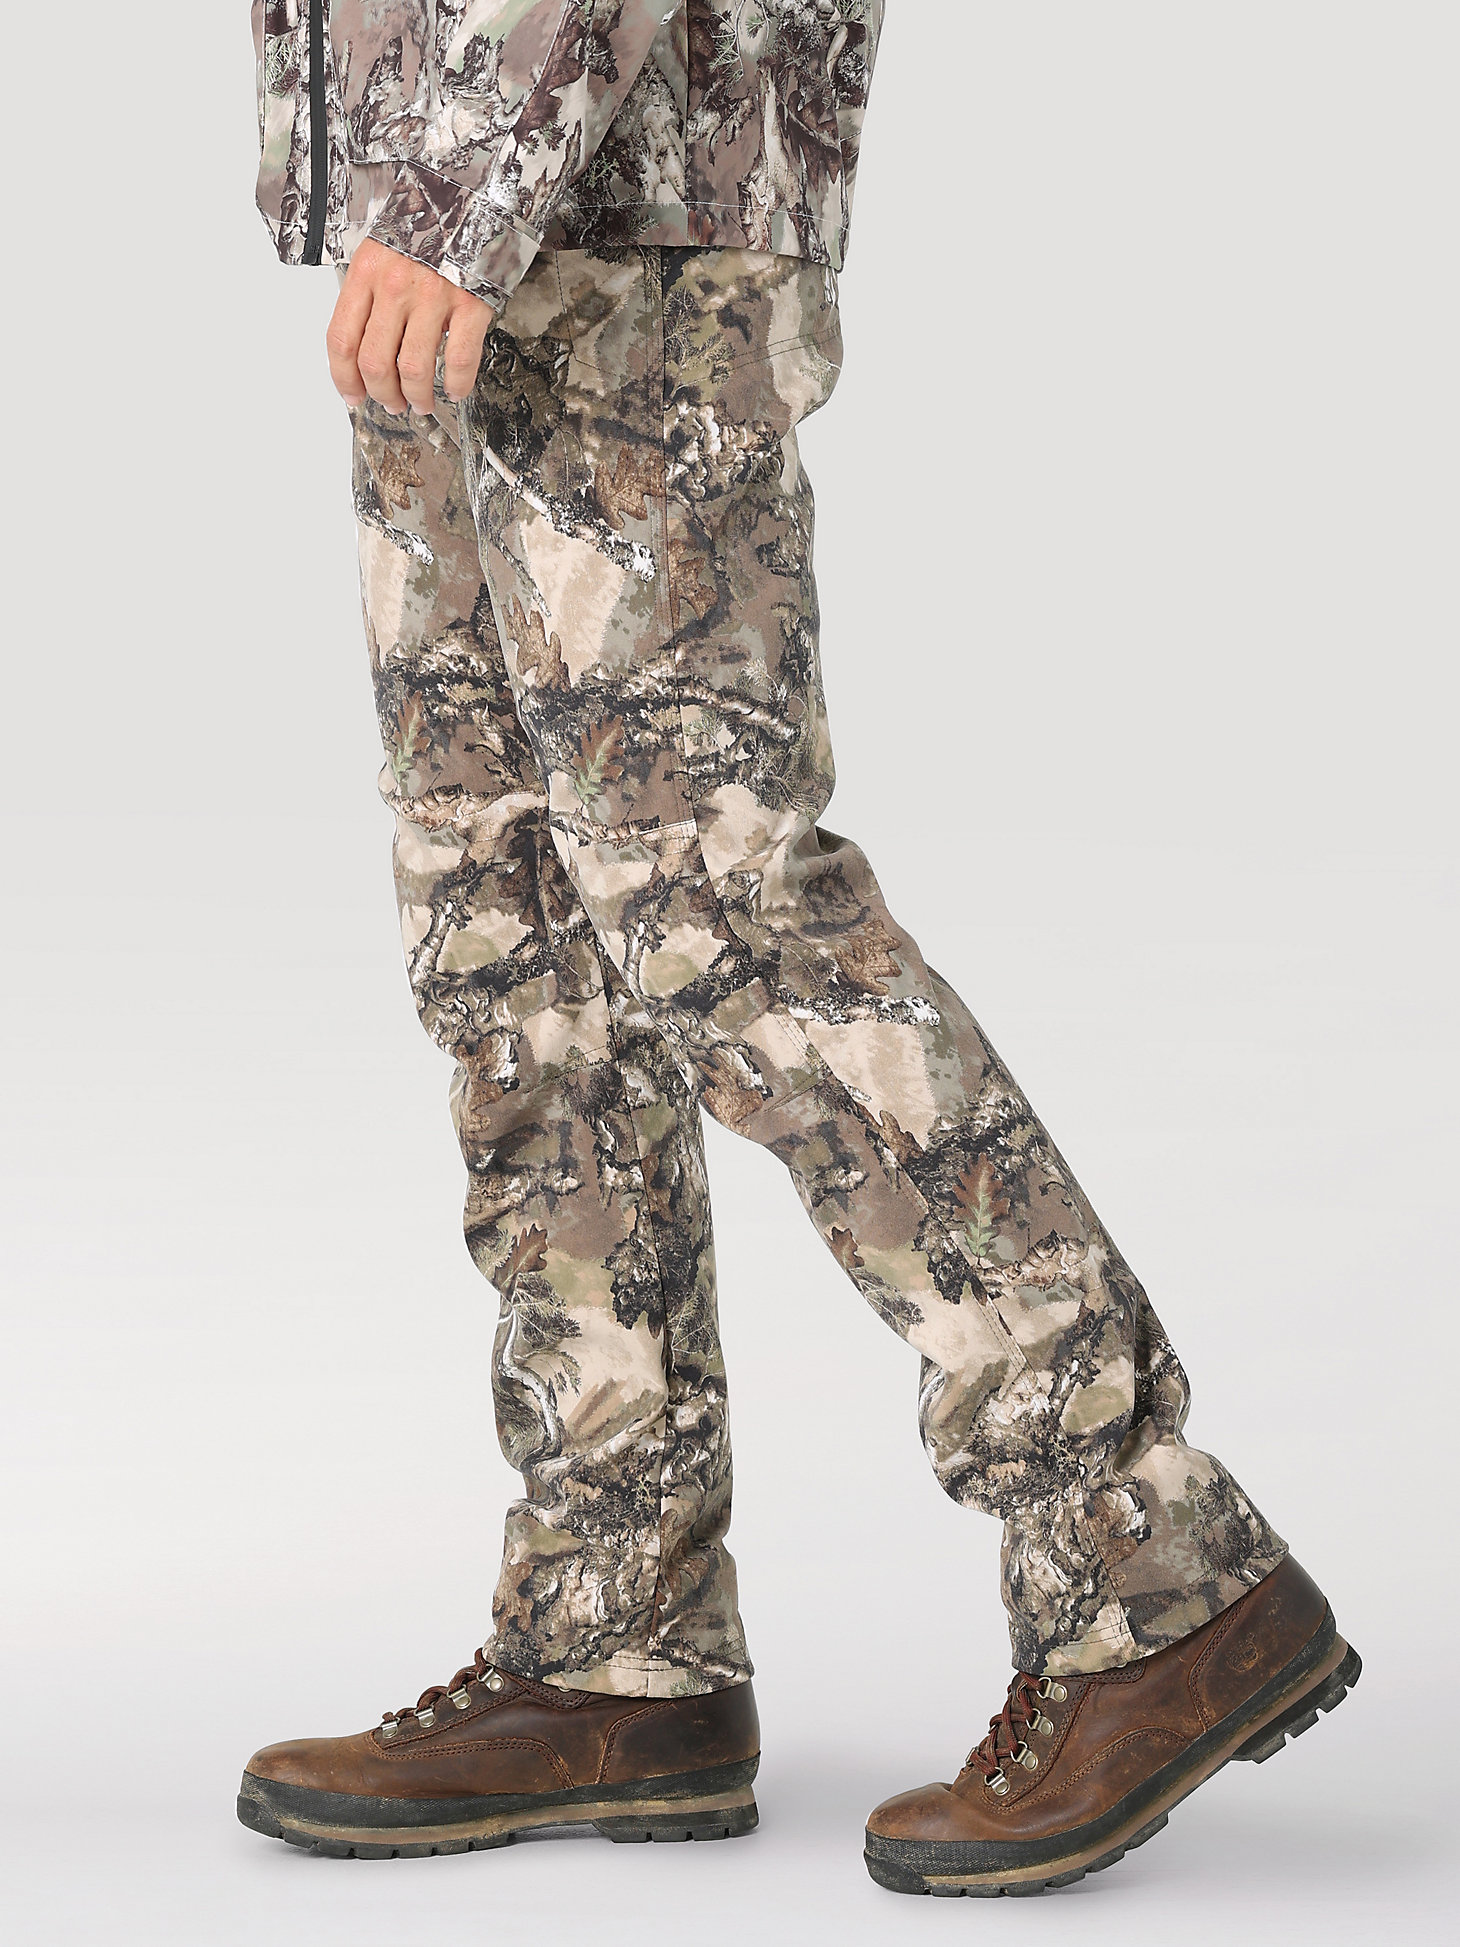 ATG Hunter™ Men's Fleece Lined Utility Pant in Warmwoods Camo alternative view 4